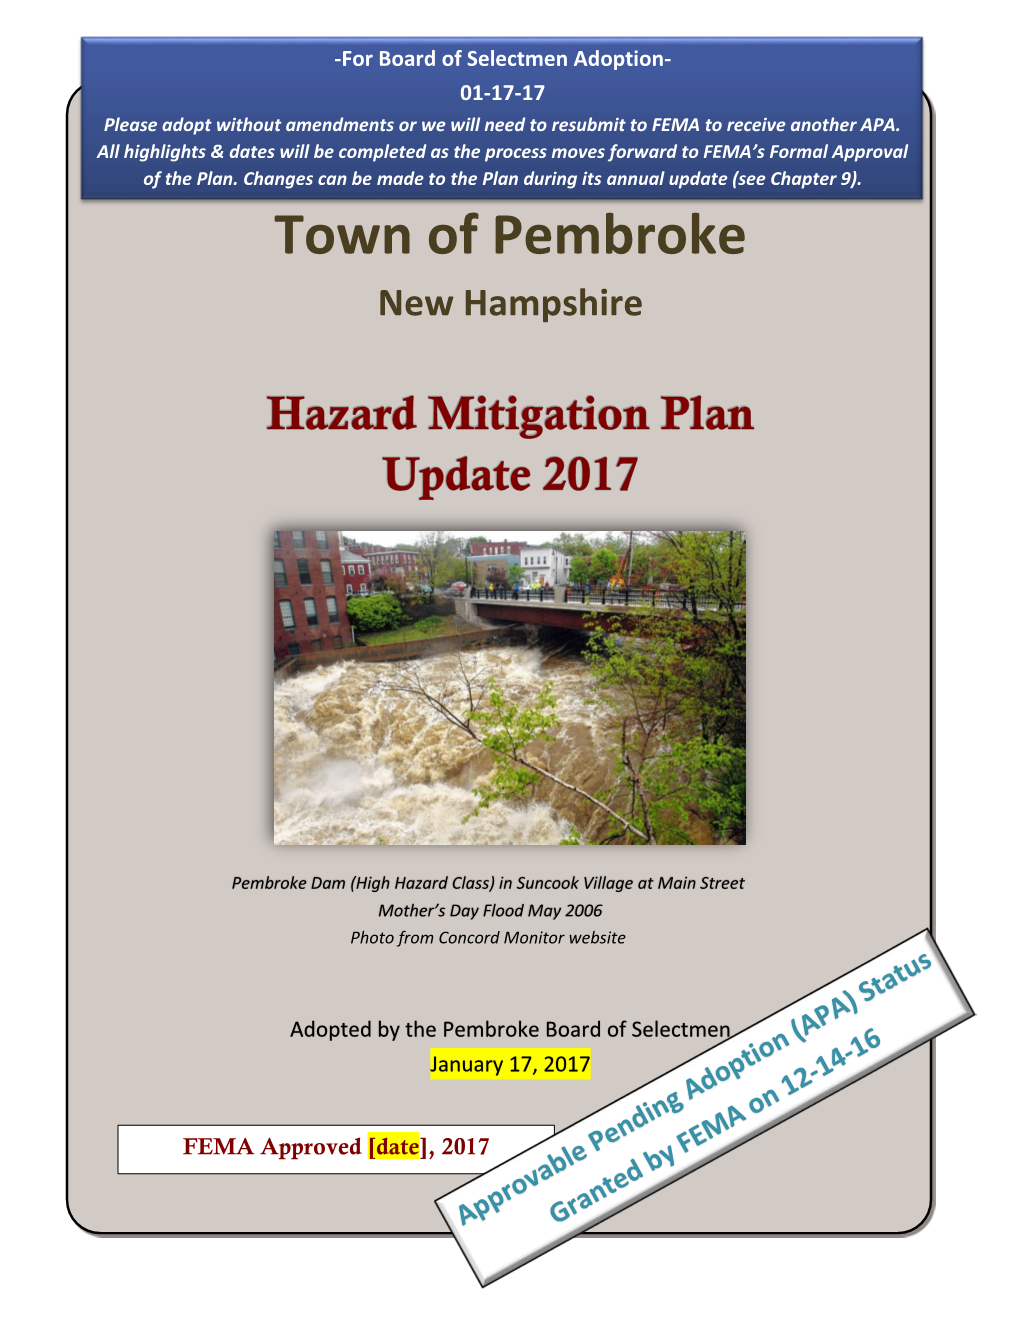 Town of Pembroke, NH Hazard Mitigation Plan Update 2017